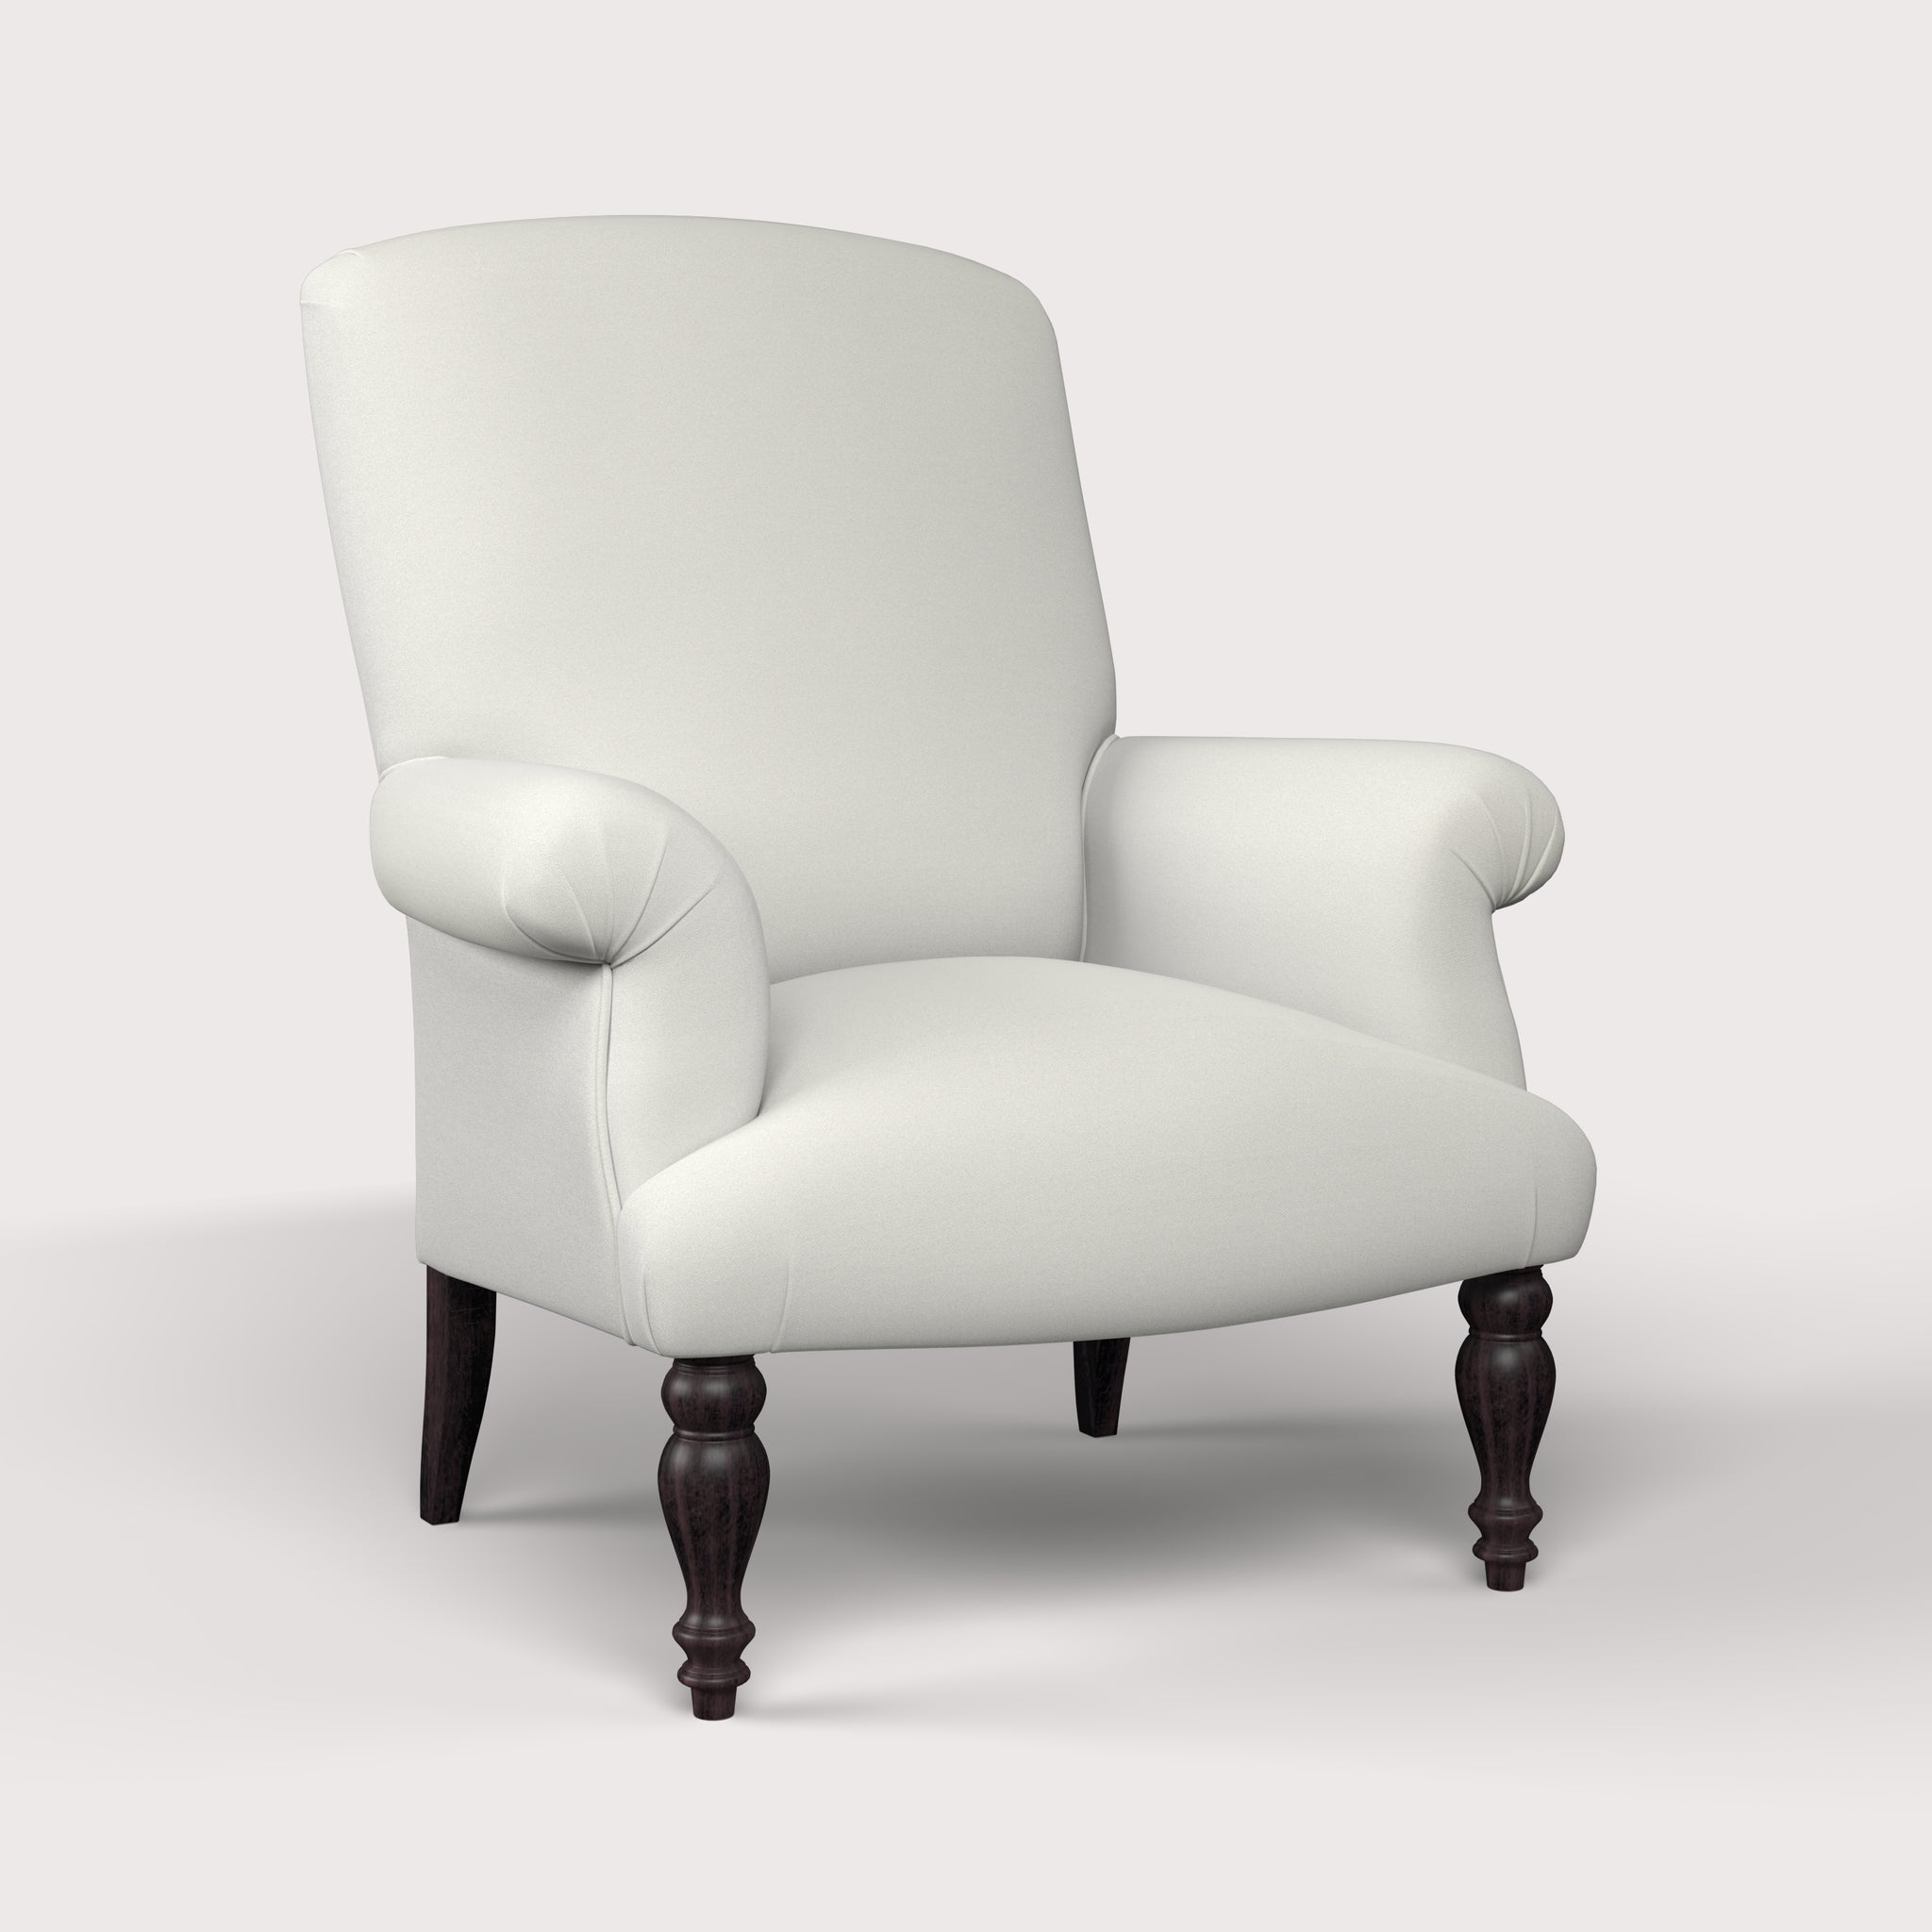 The Austen Armchair